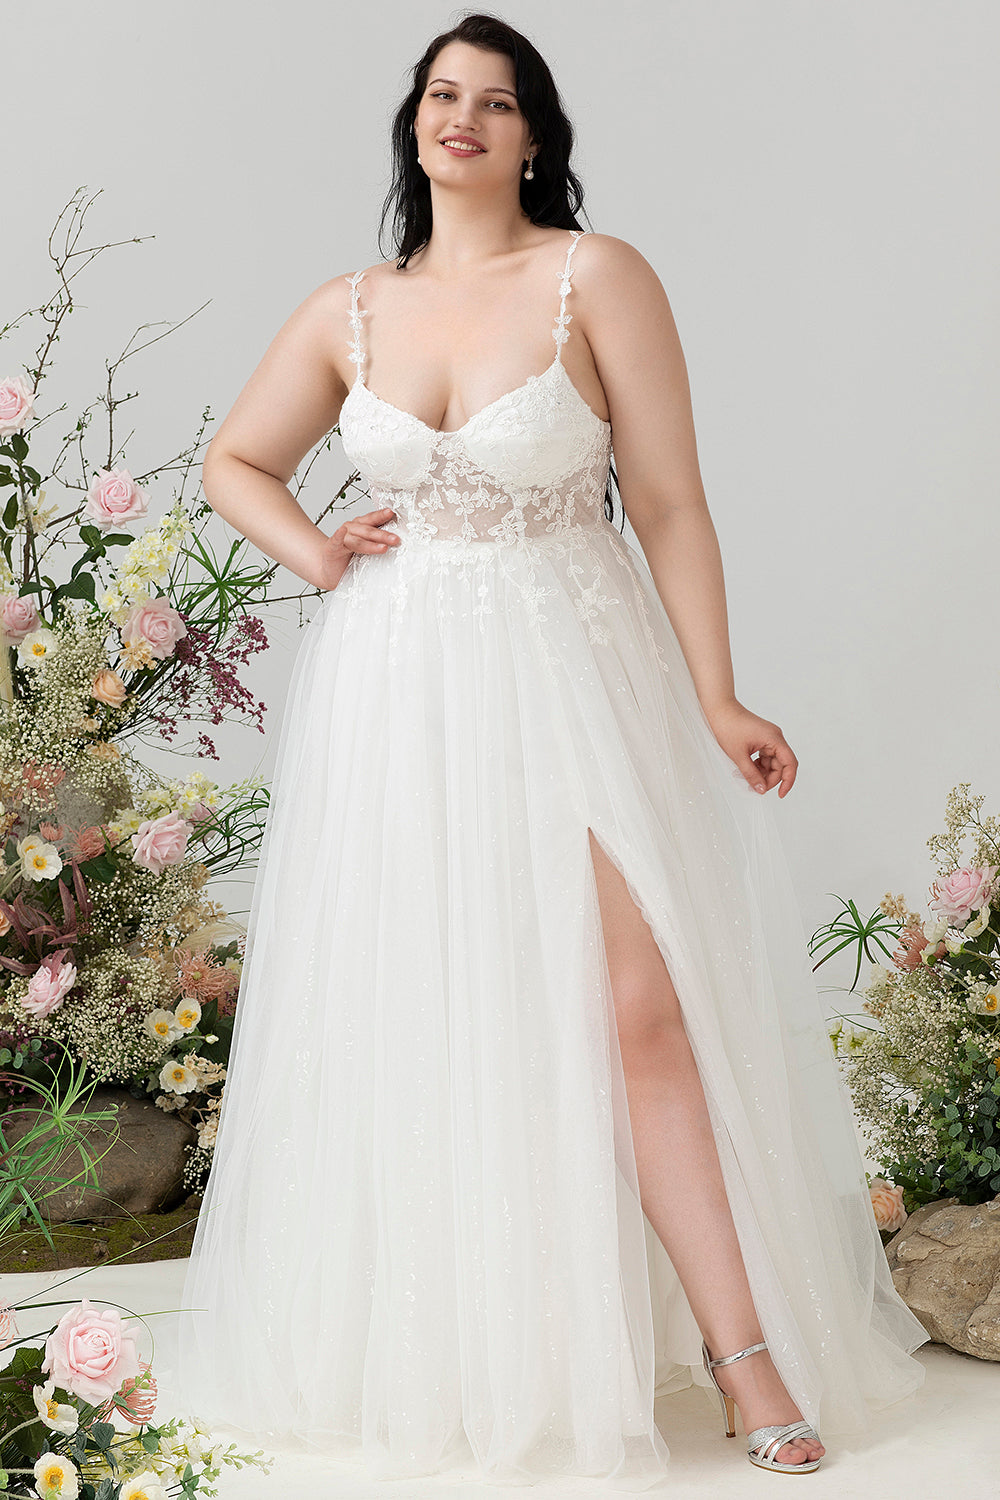 18 Flattering Wedding Dresses That Hide Belly Fat to Look Slimmer